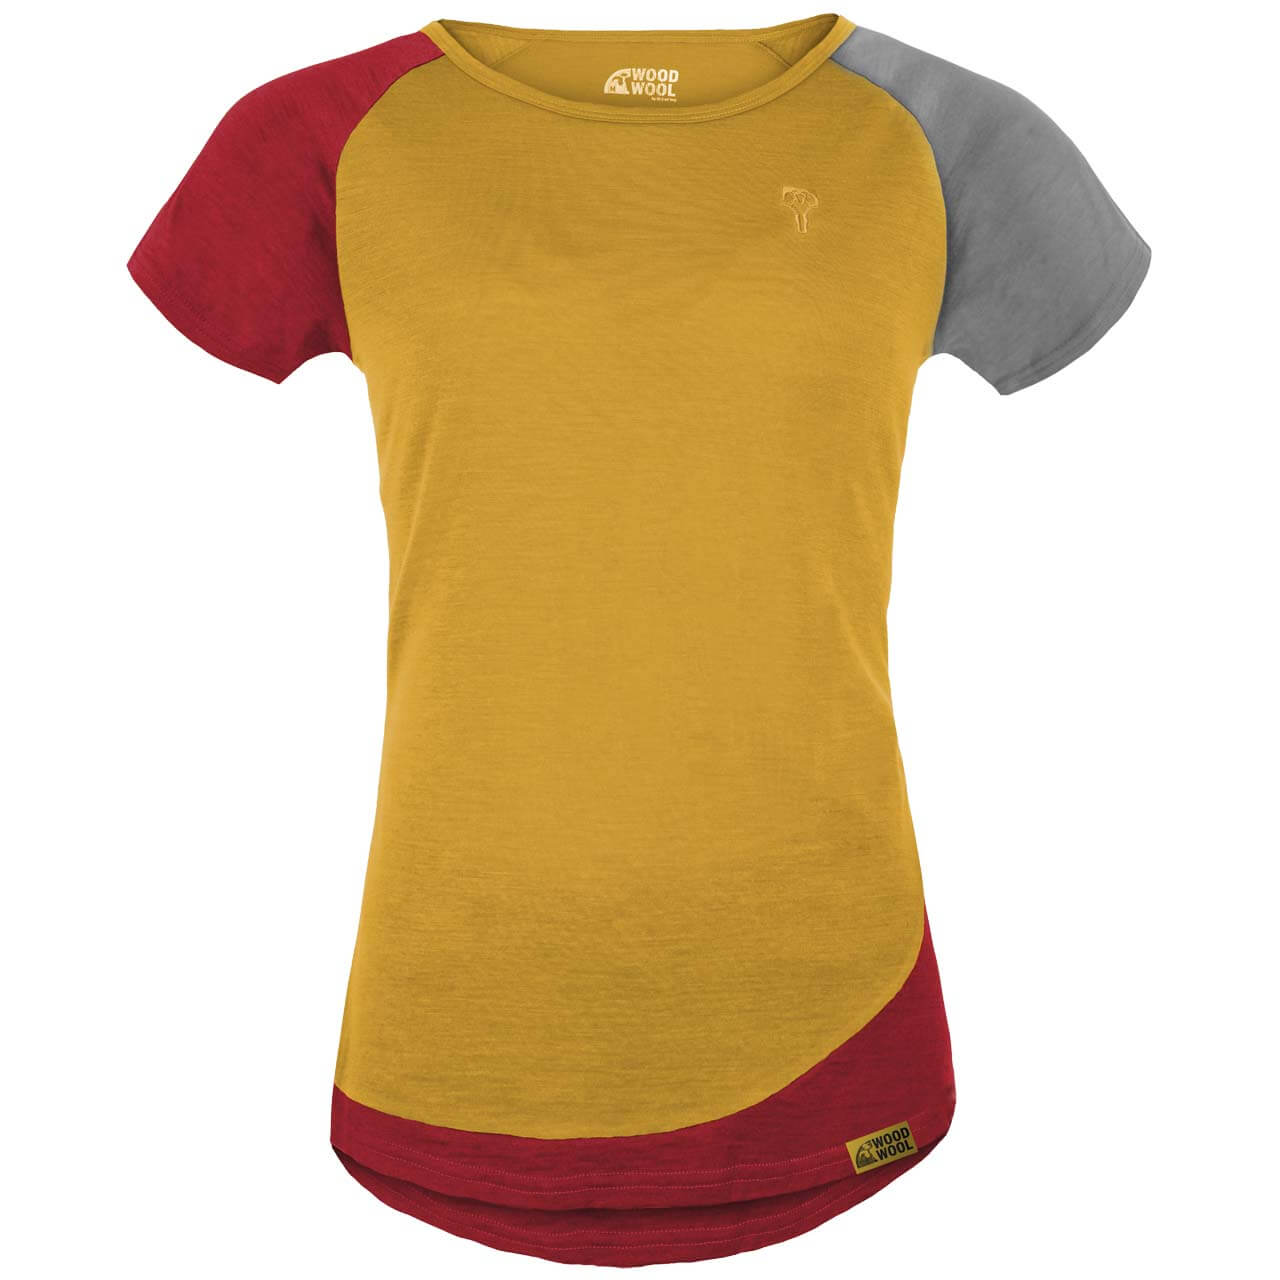 Grüezi Bag WoodWool Janeway T-Shirt - Daisy Daze Yellow, M von Grüezi Bag}